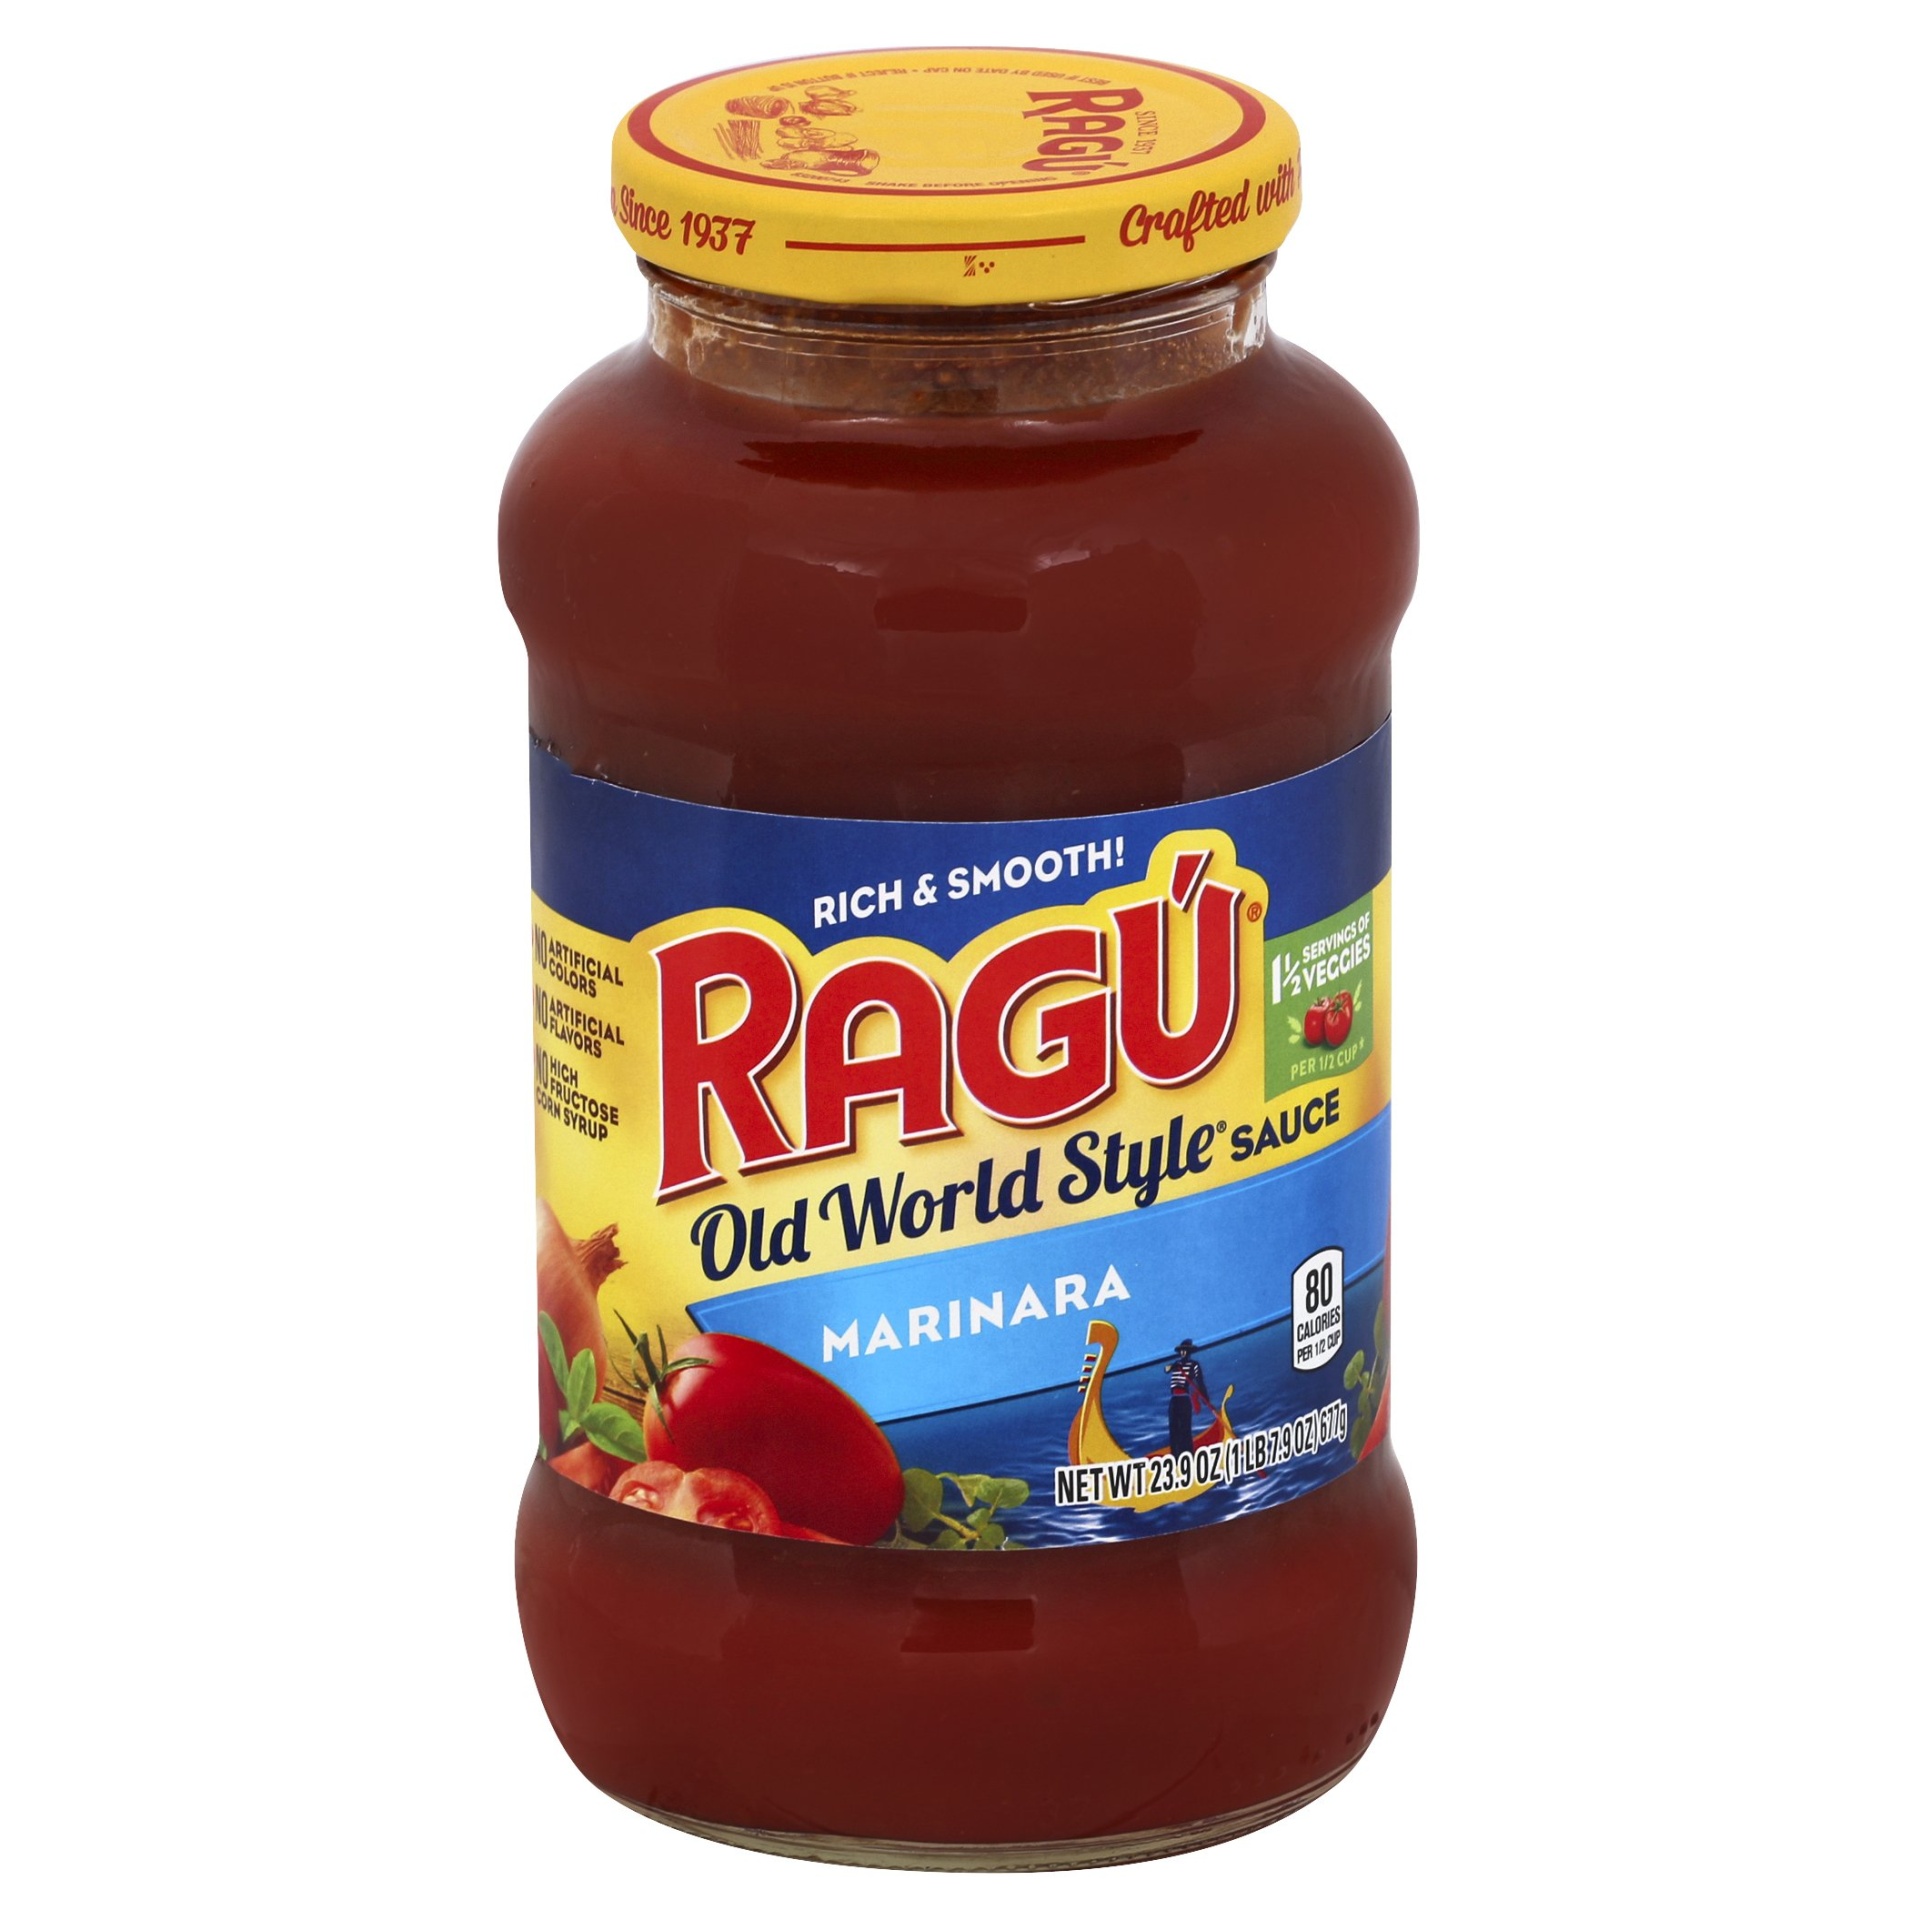 Ragu Old World Style Marinara Pasta Sauce Glass Jar 23.9 oz